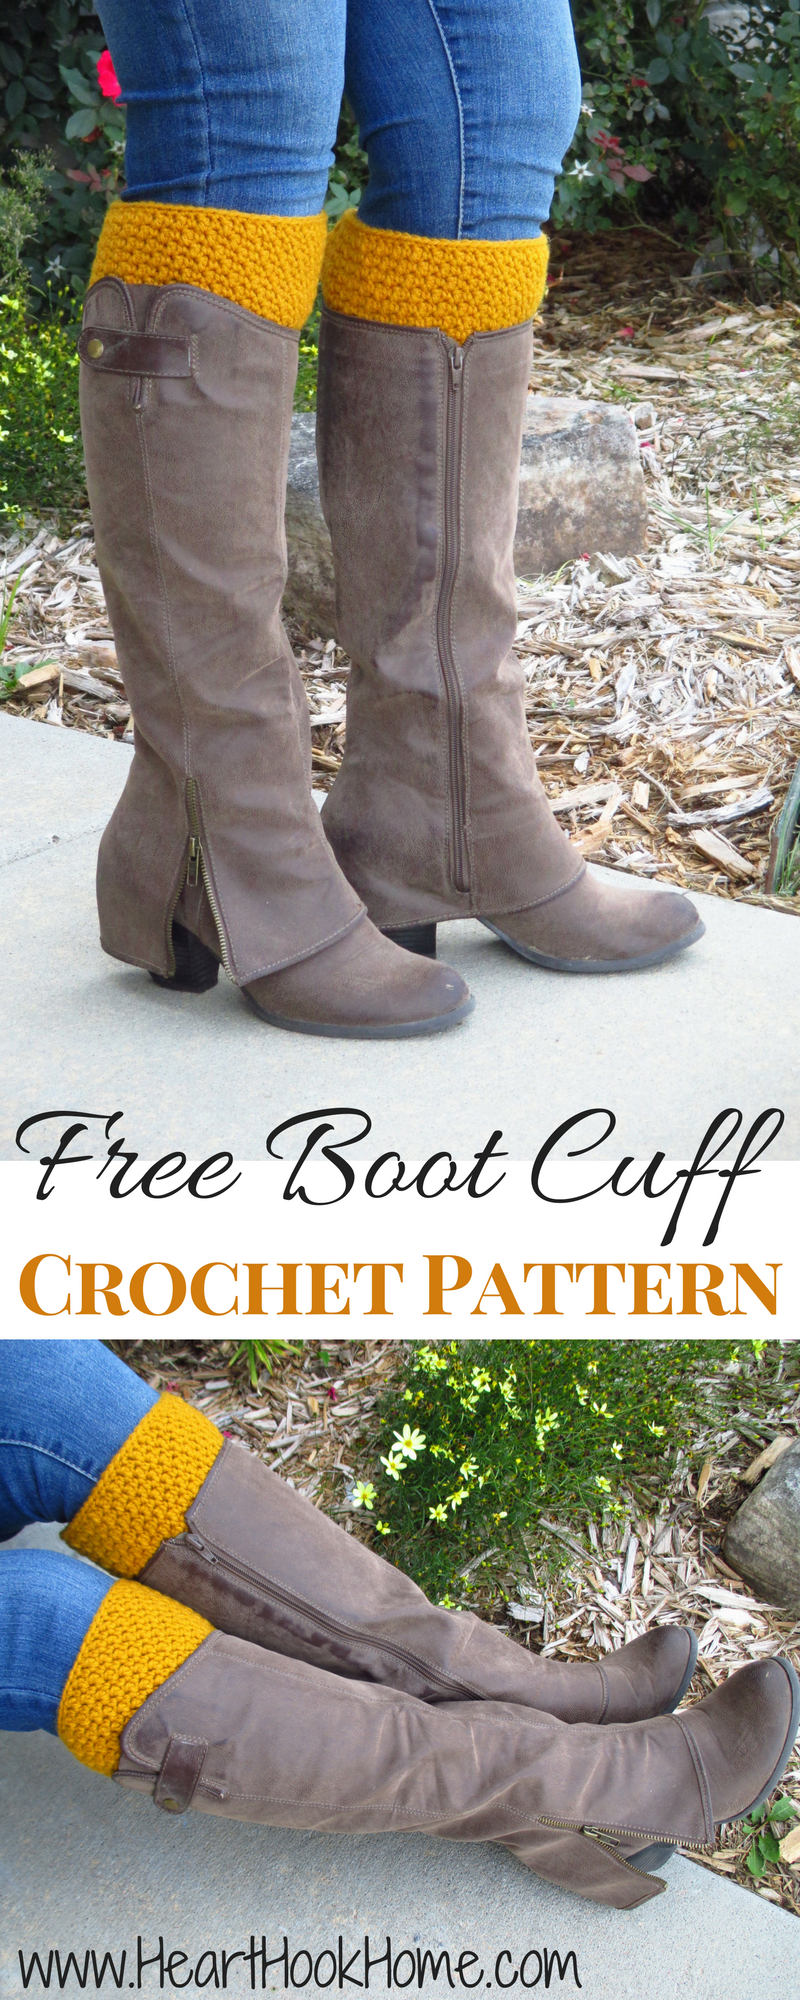 Free Crochet Boot Cuff Patterns Reversible Boot Cuffs A Free Crochet Pattern